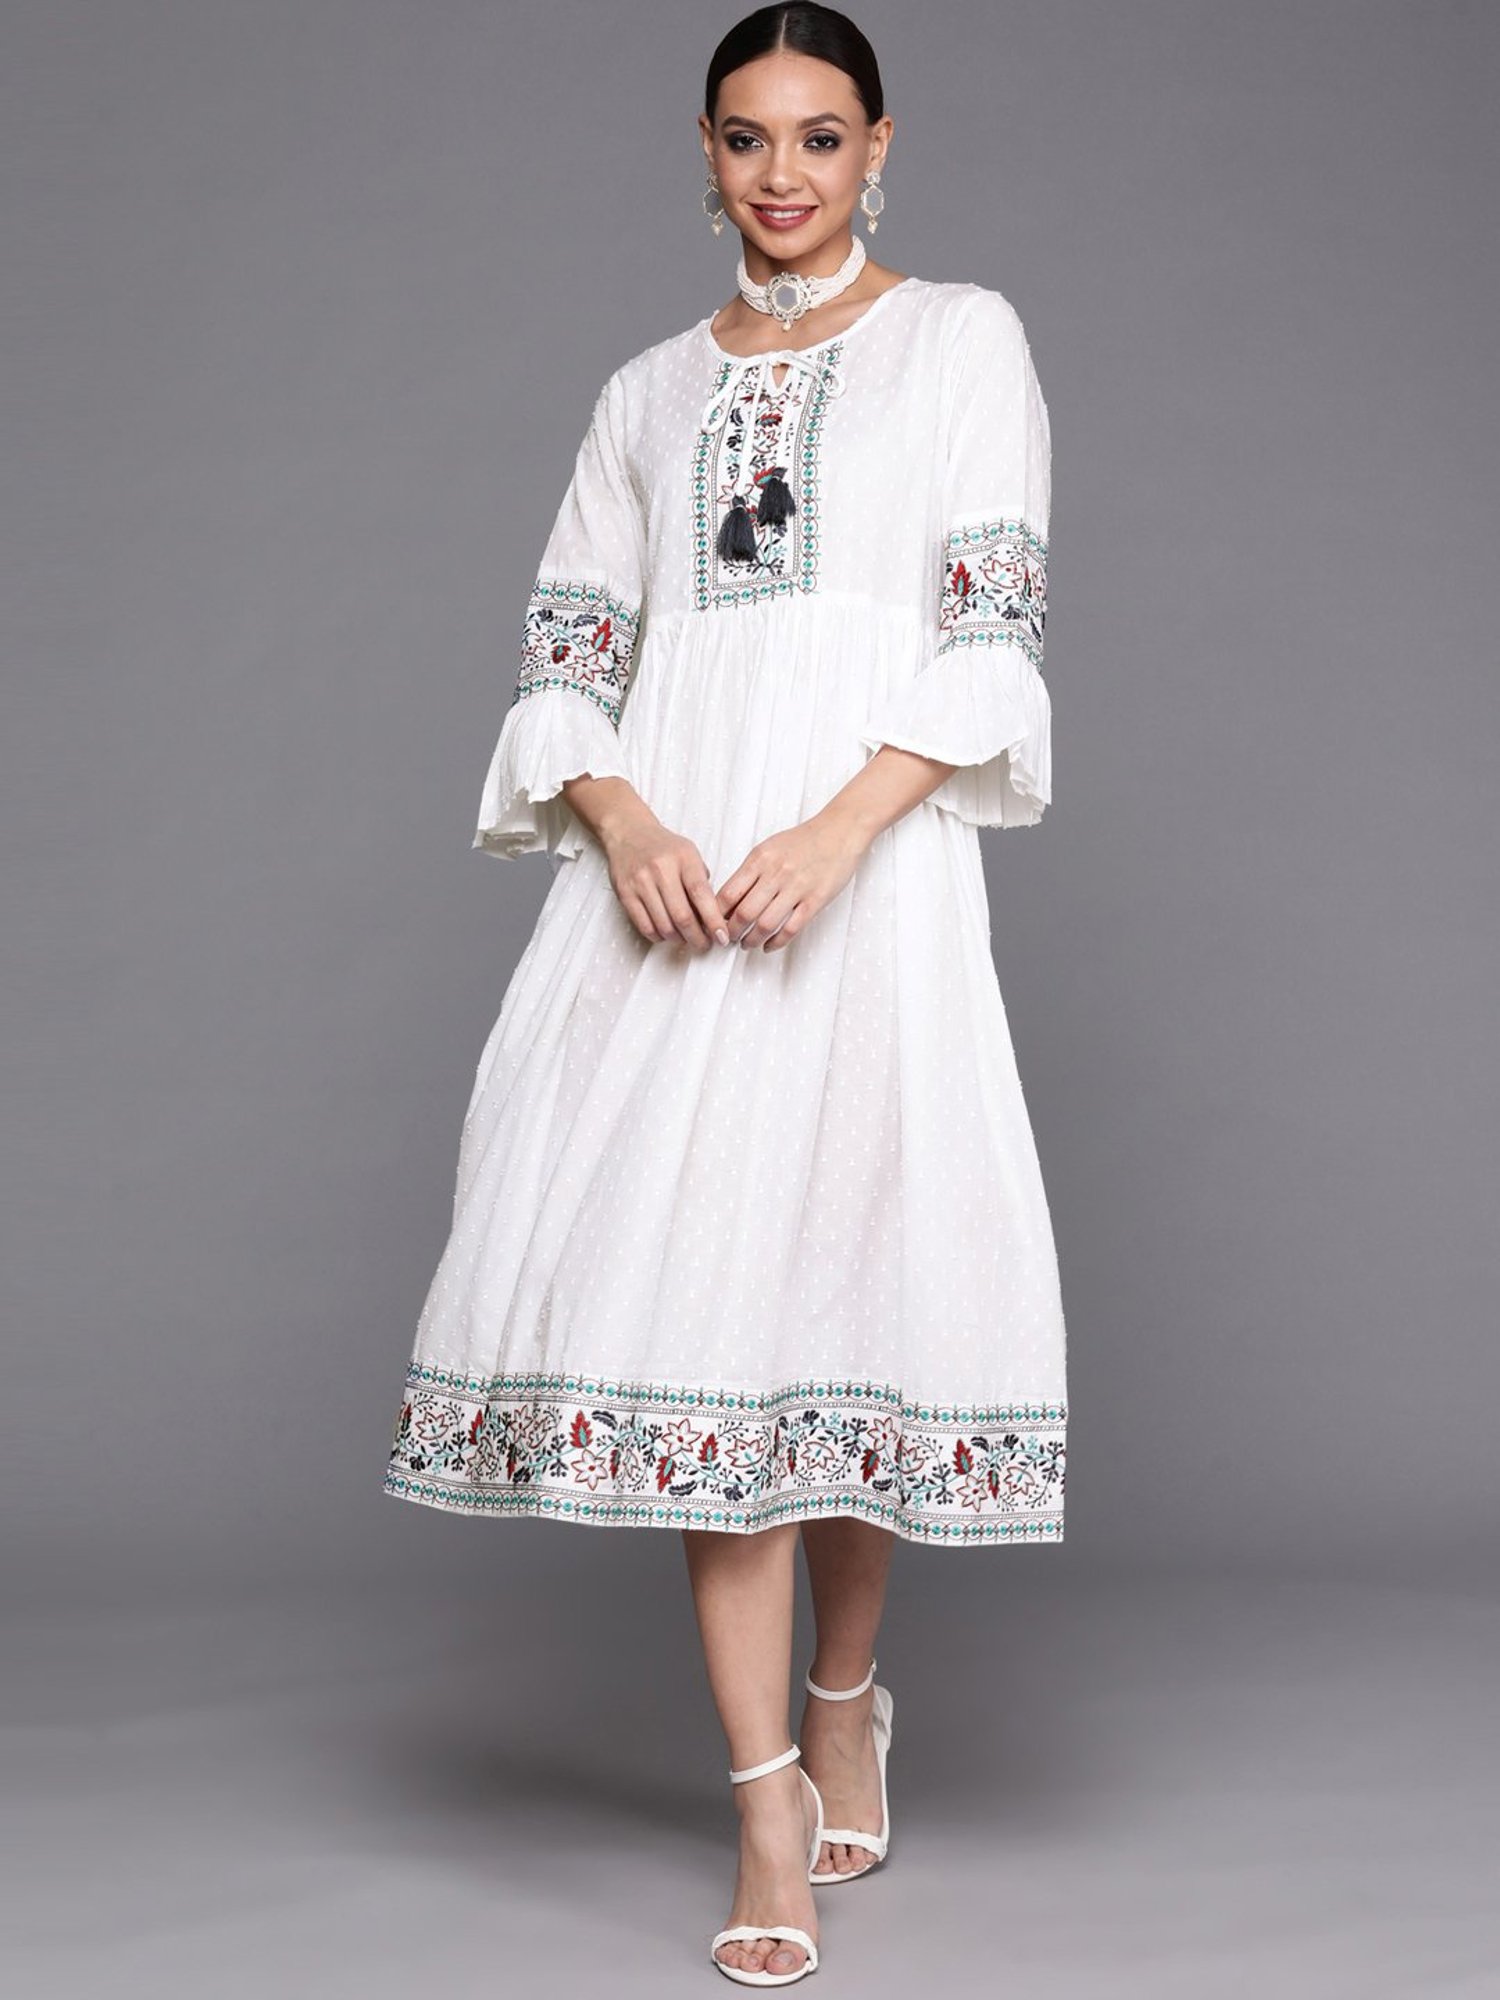 THE SHIFT DRESS in WHITE HONEYCOMB PIQUE COTTON – Lisa Marie Fernandez